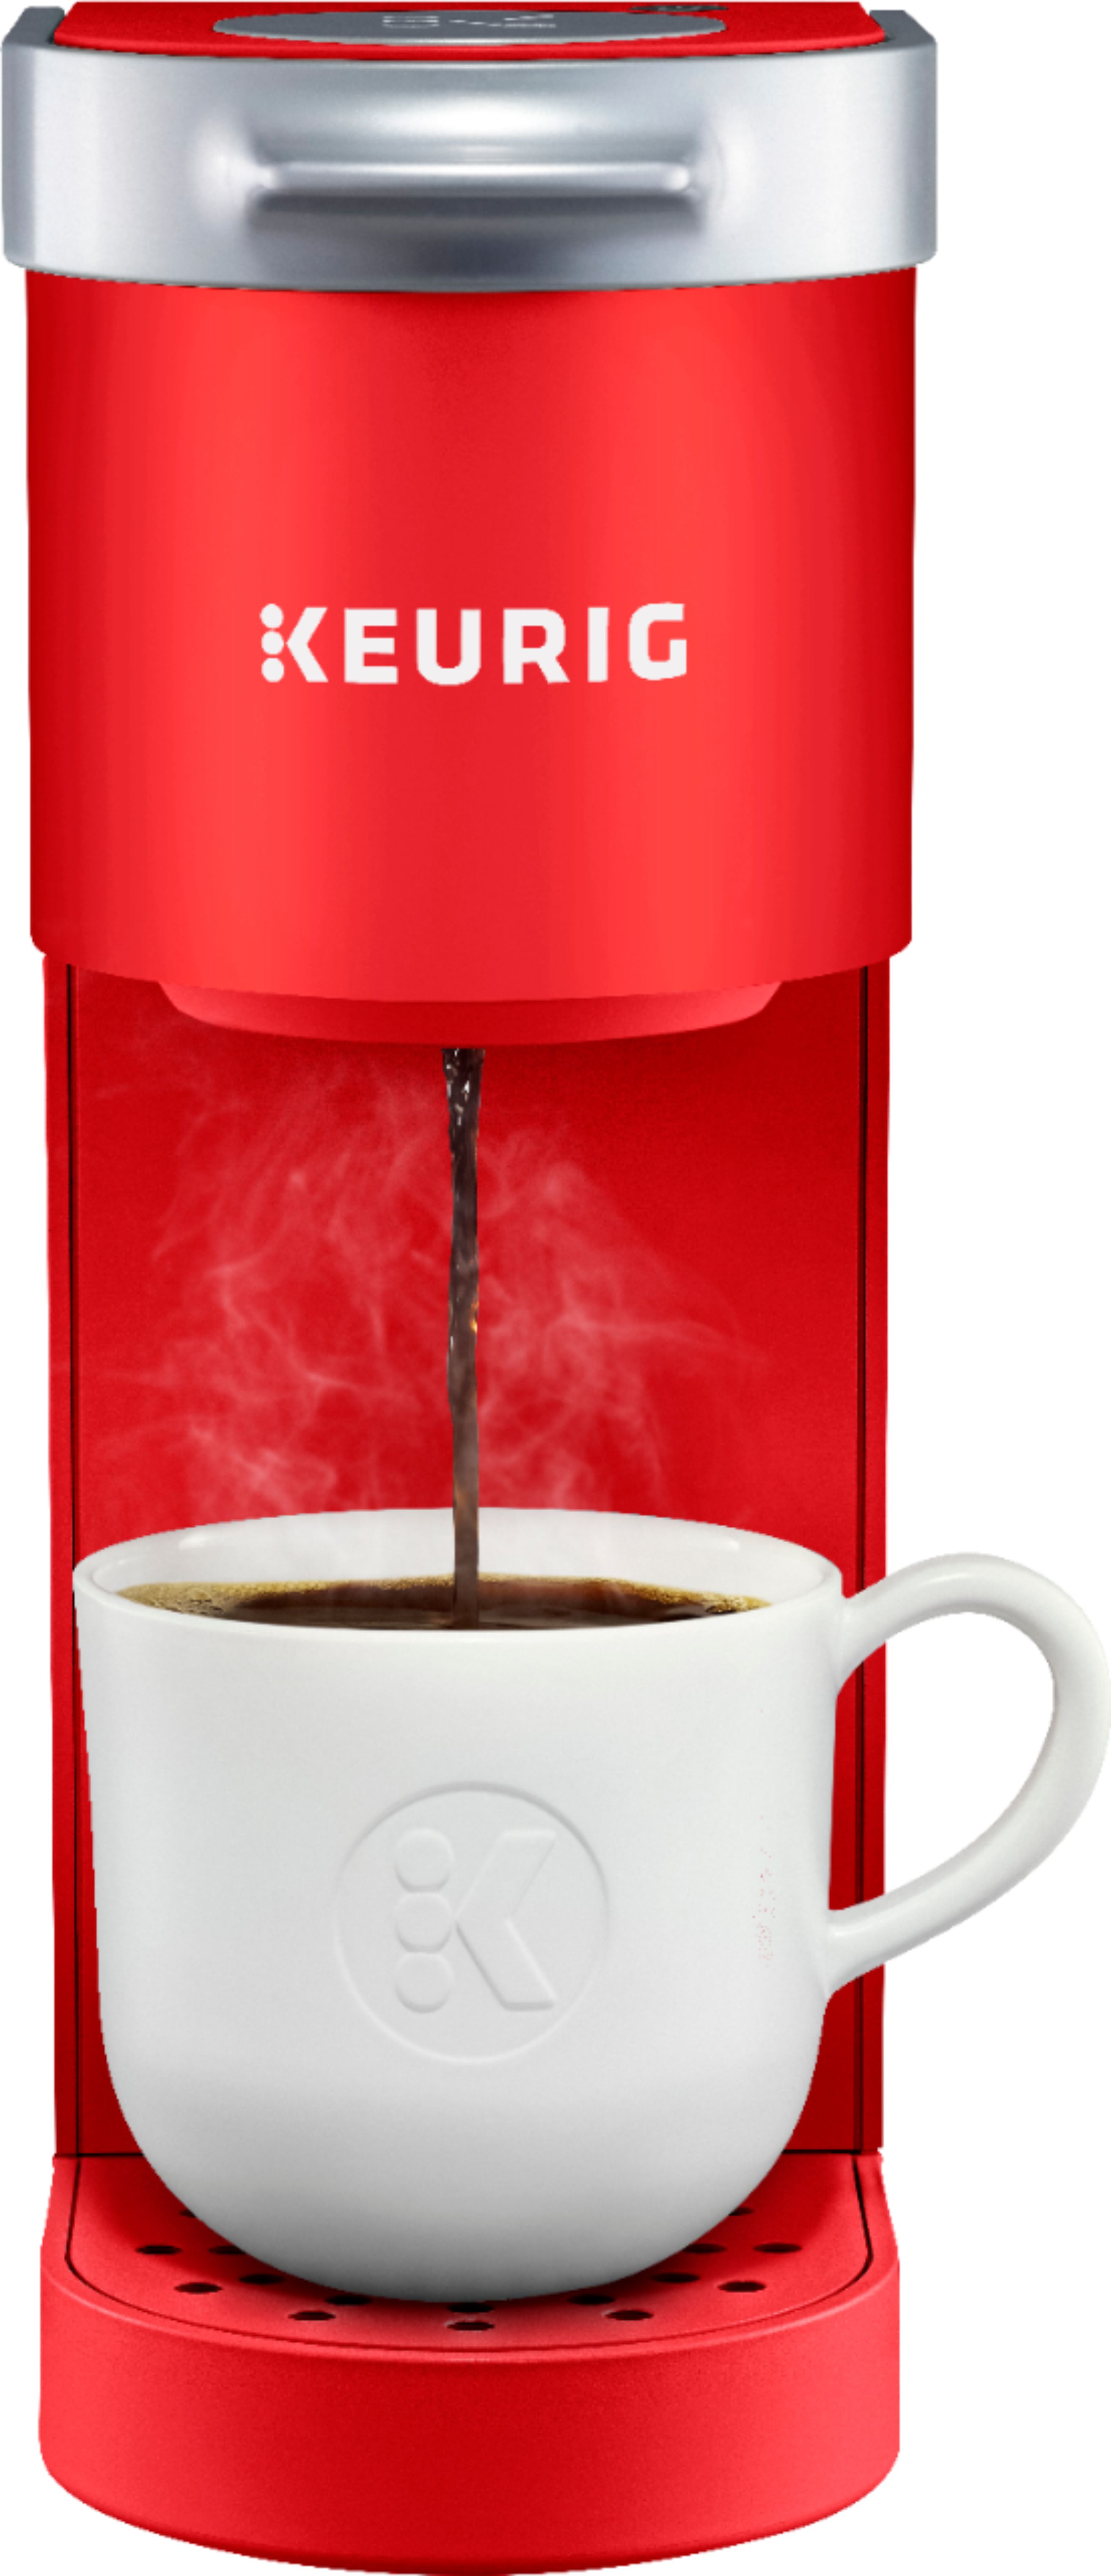 Keurig K-Mini Single Serve K-Cup Pod Coffee Maker - Featuring An